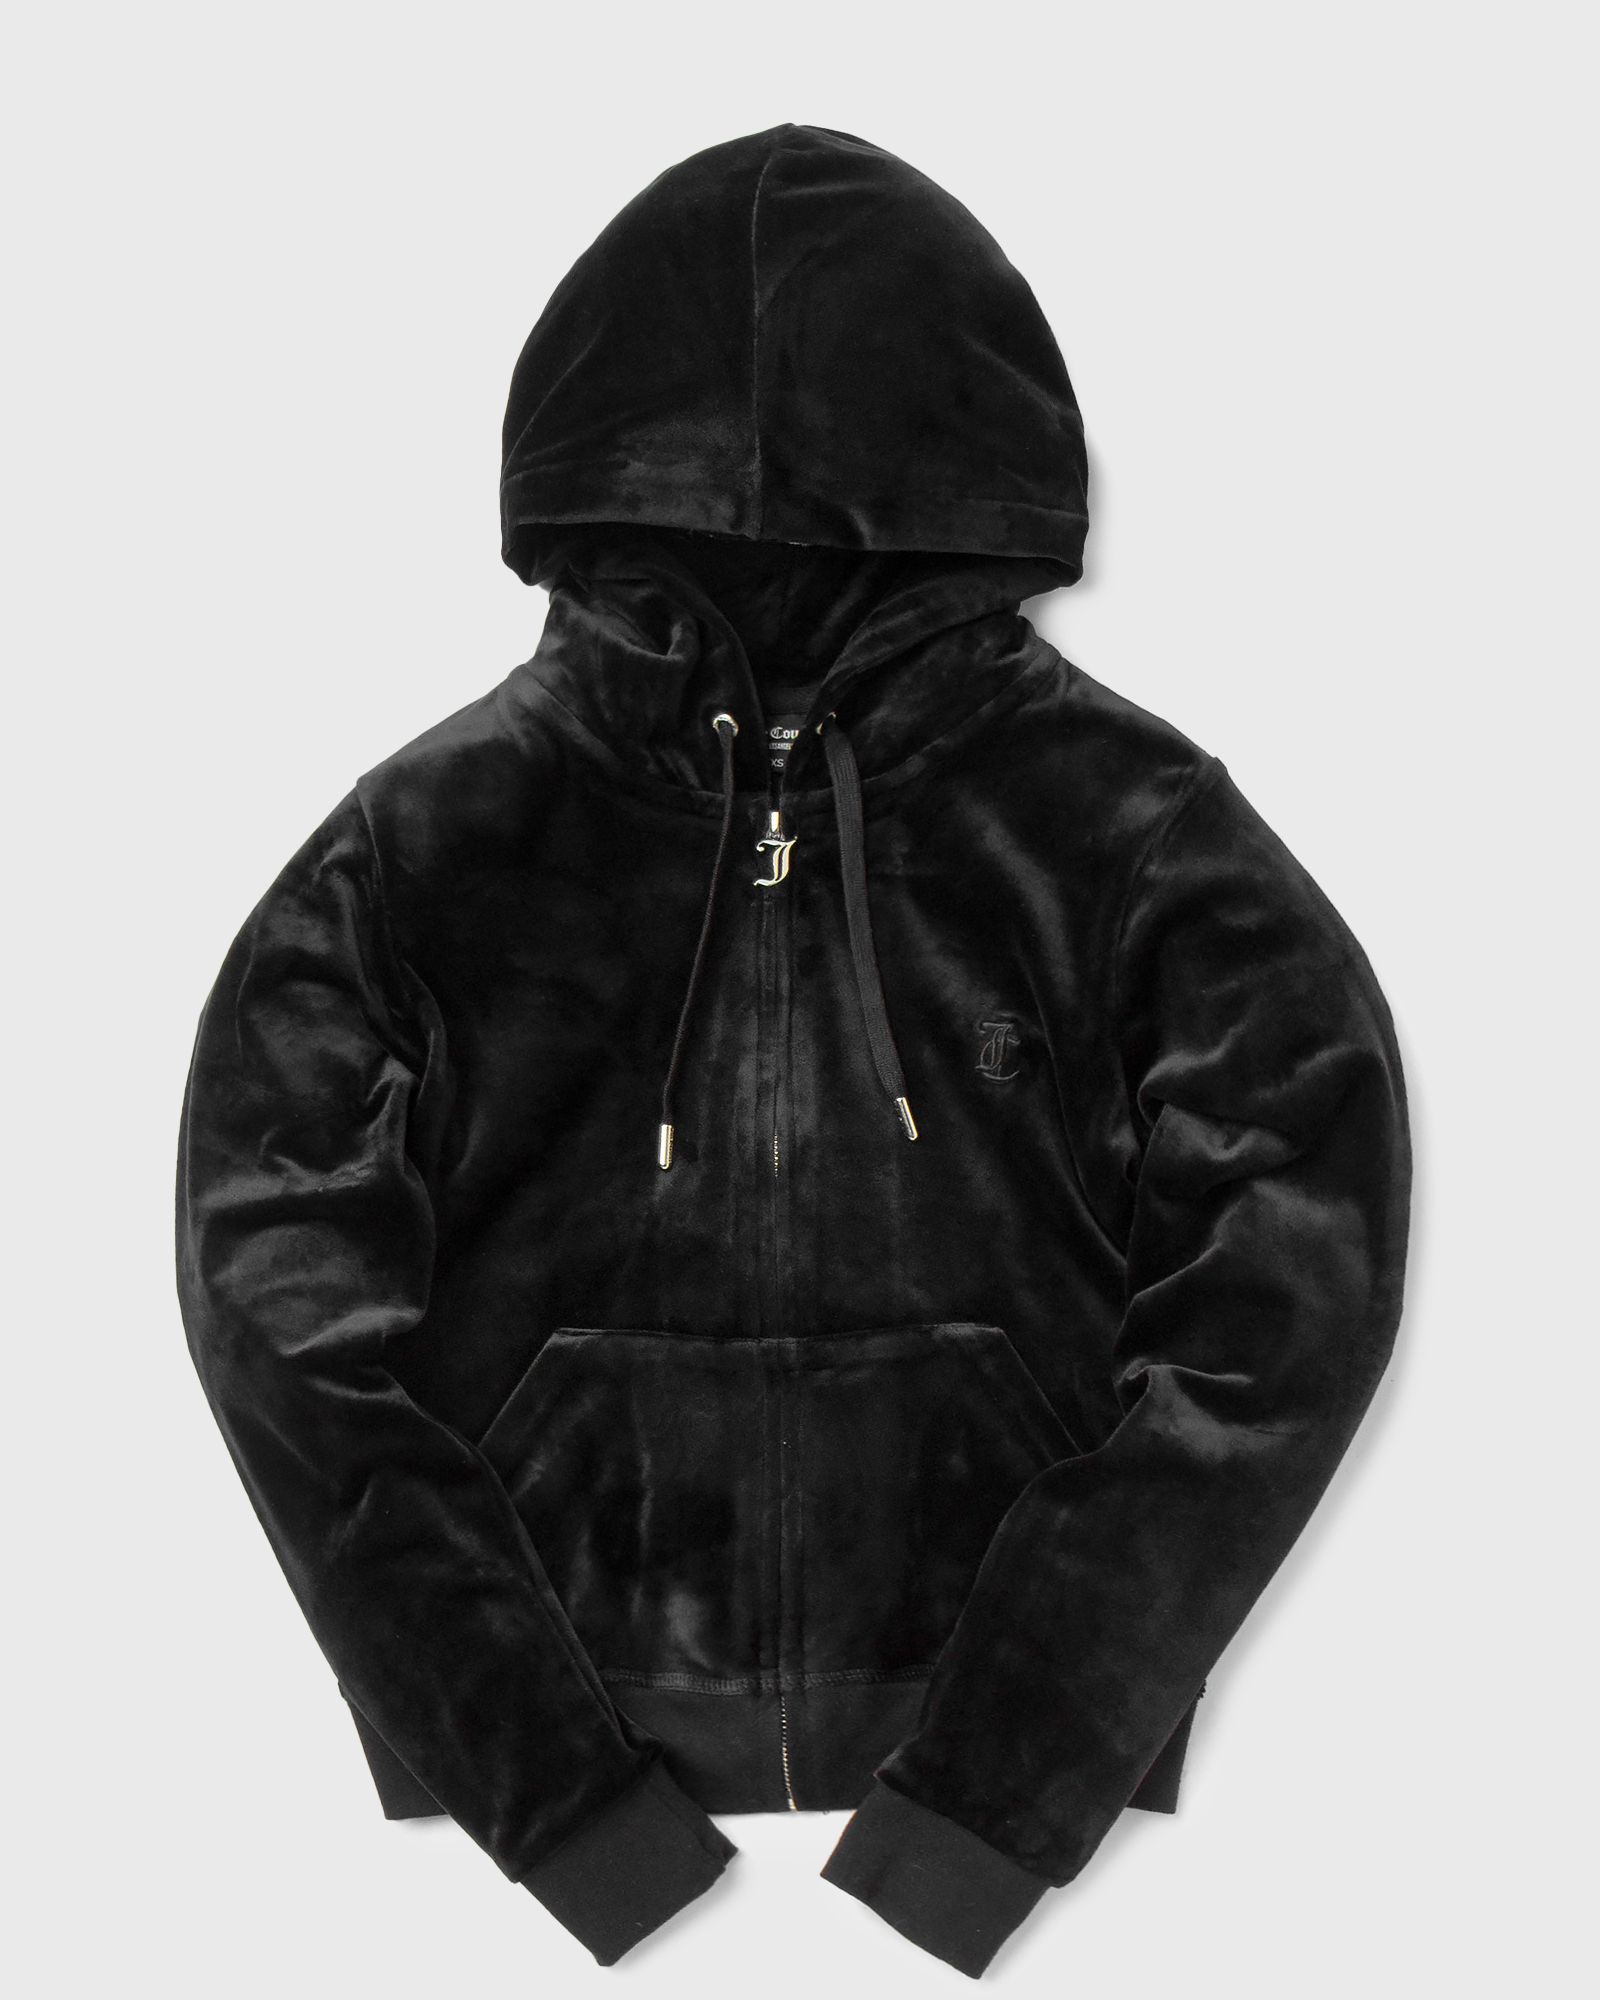 Juicy Couture - classic velour robertson zip hoodie women track jackets|zippers black in größe:l